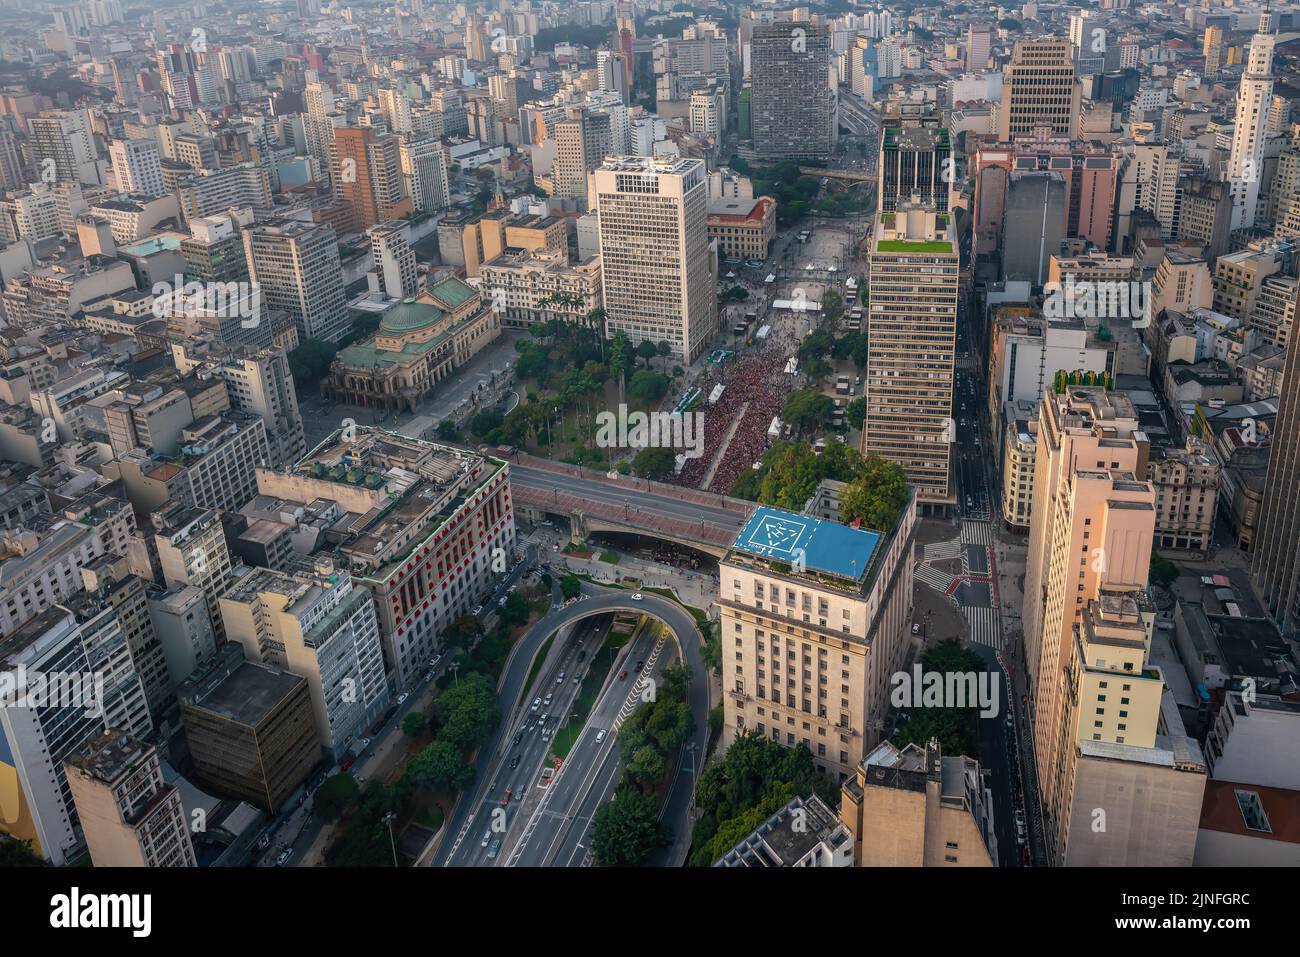 Aerial view of Sao Paulo Historic City Center with Vale do Anhangabau, Viaduto do Cha, Municipal Theatre and City Hall - Sao Paulo, Brazil Stock Photo